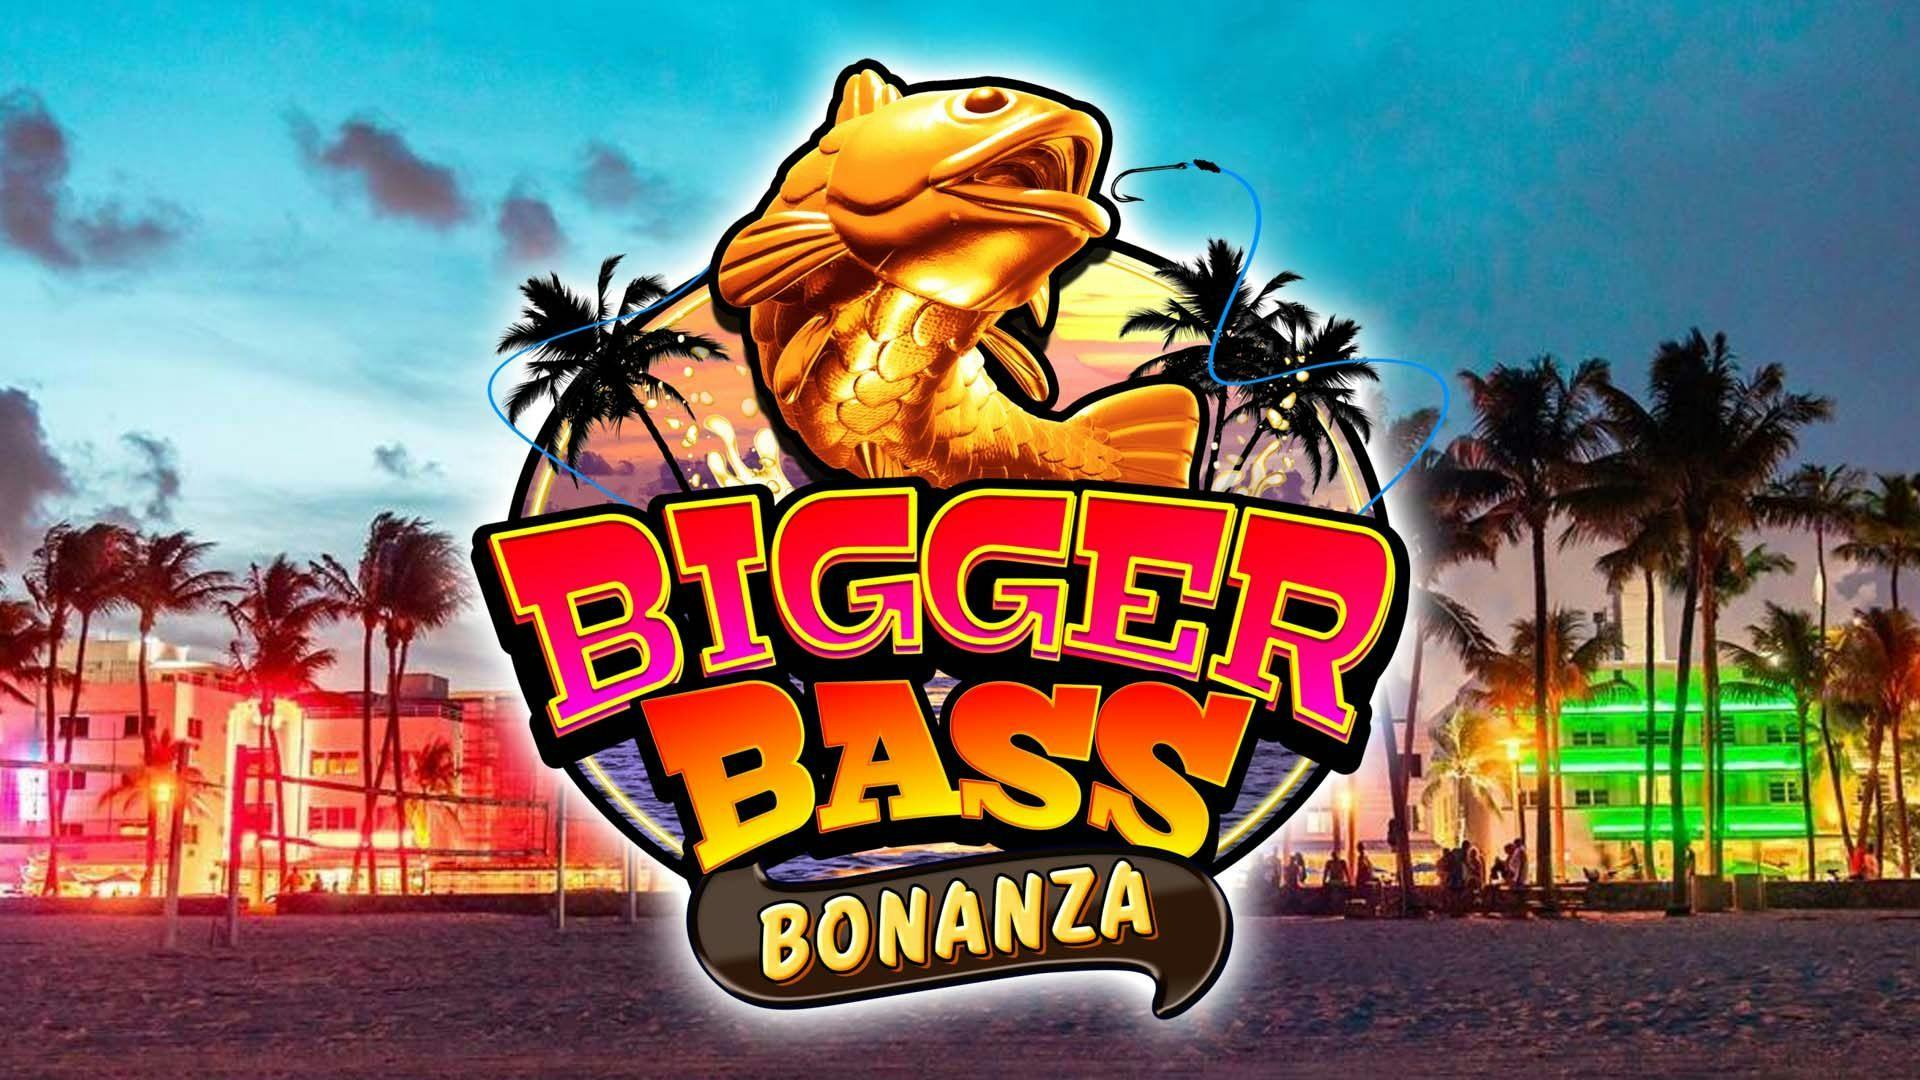 Bigger Bass Bonanza Slot Machine Online Free Game Play